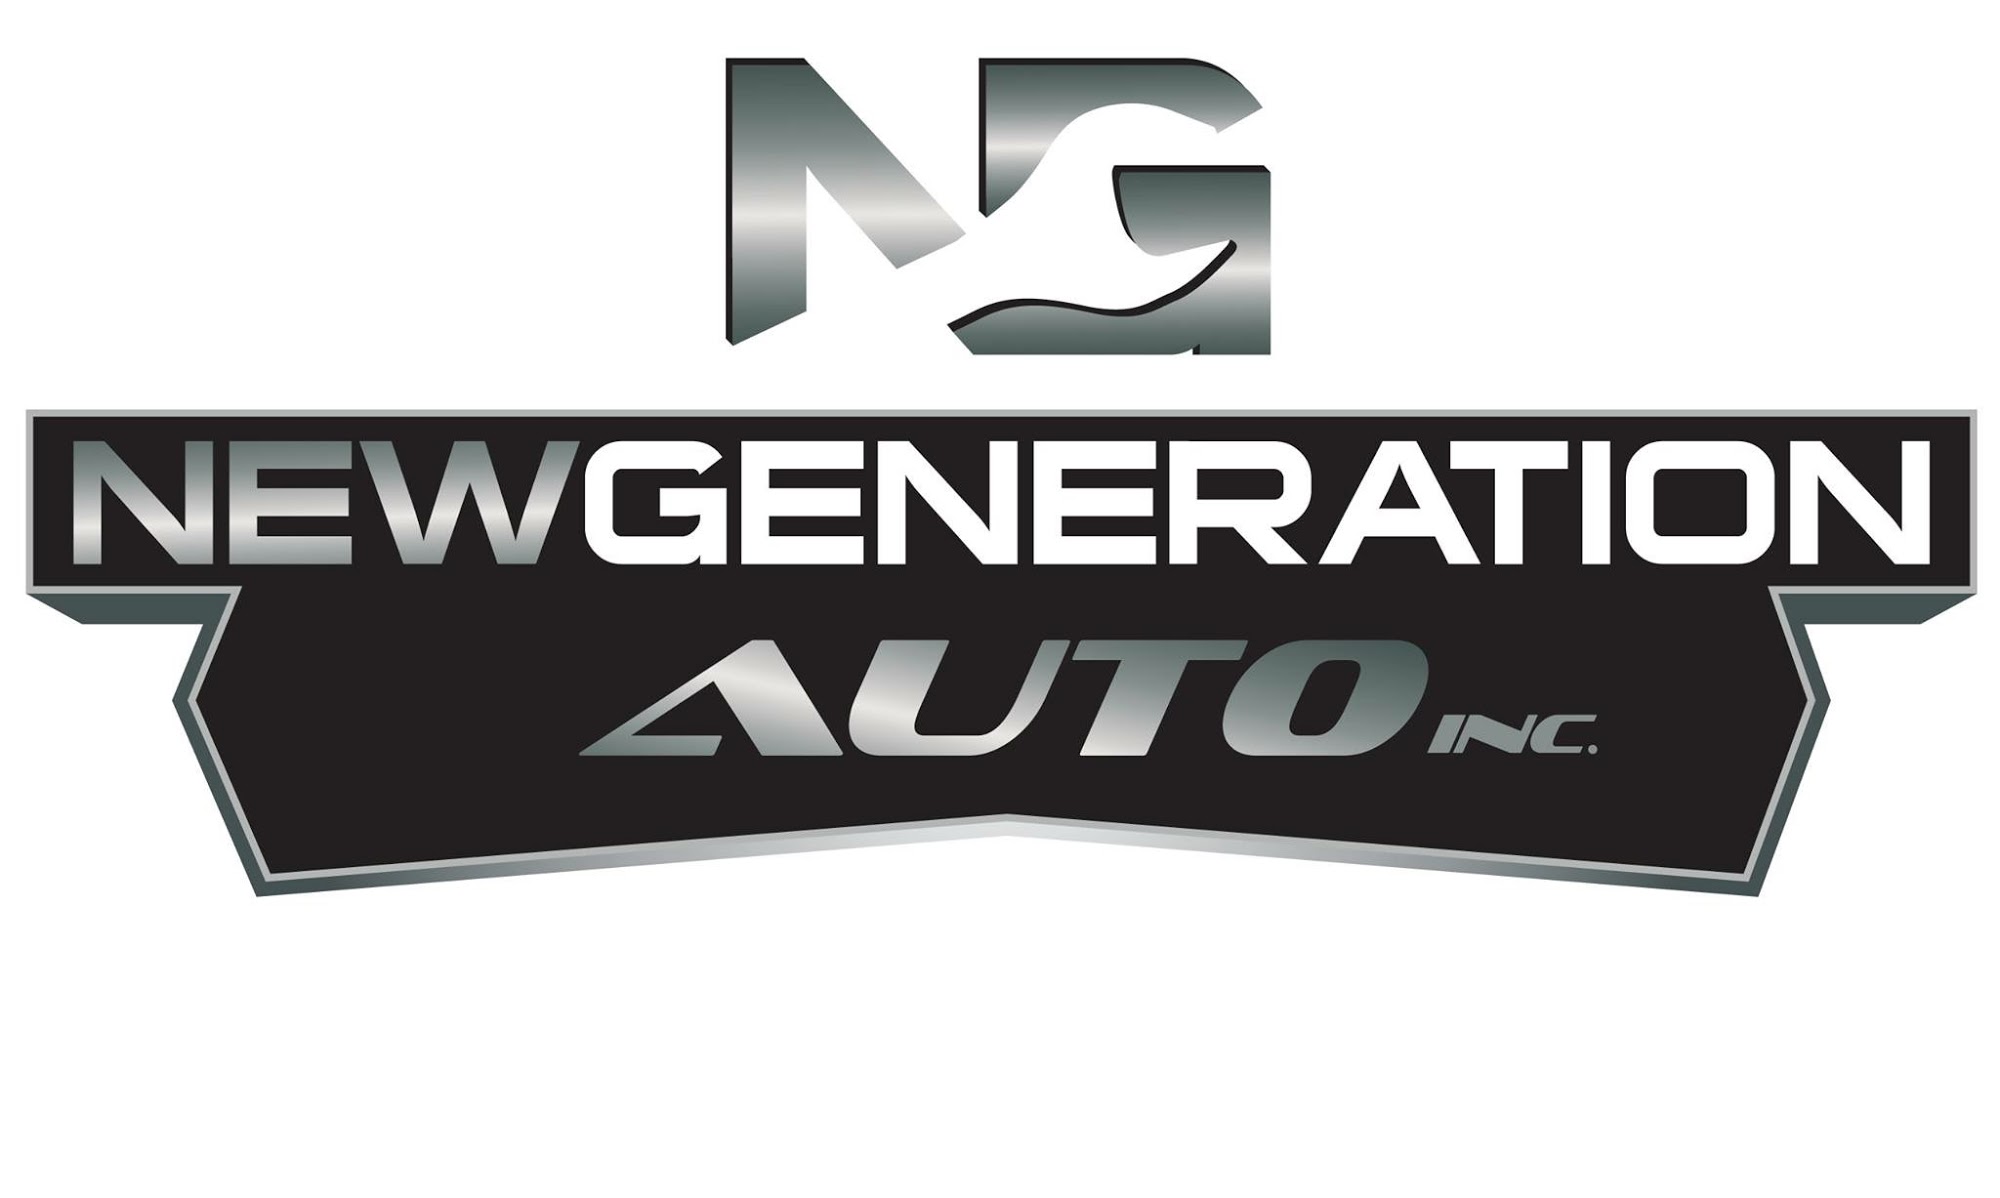 New Generation Auto Inc